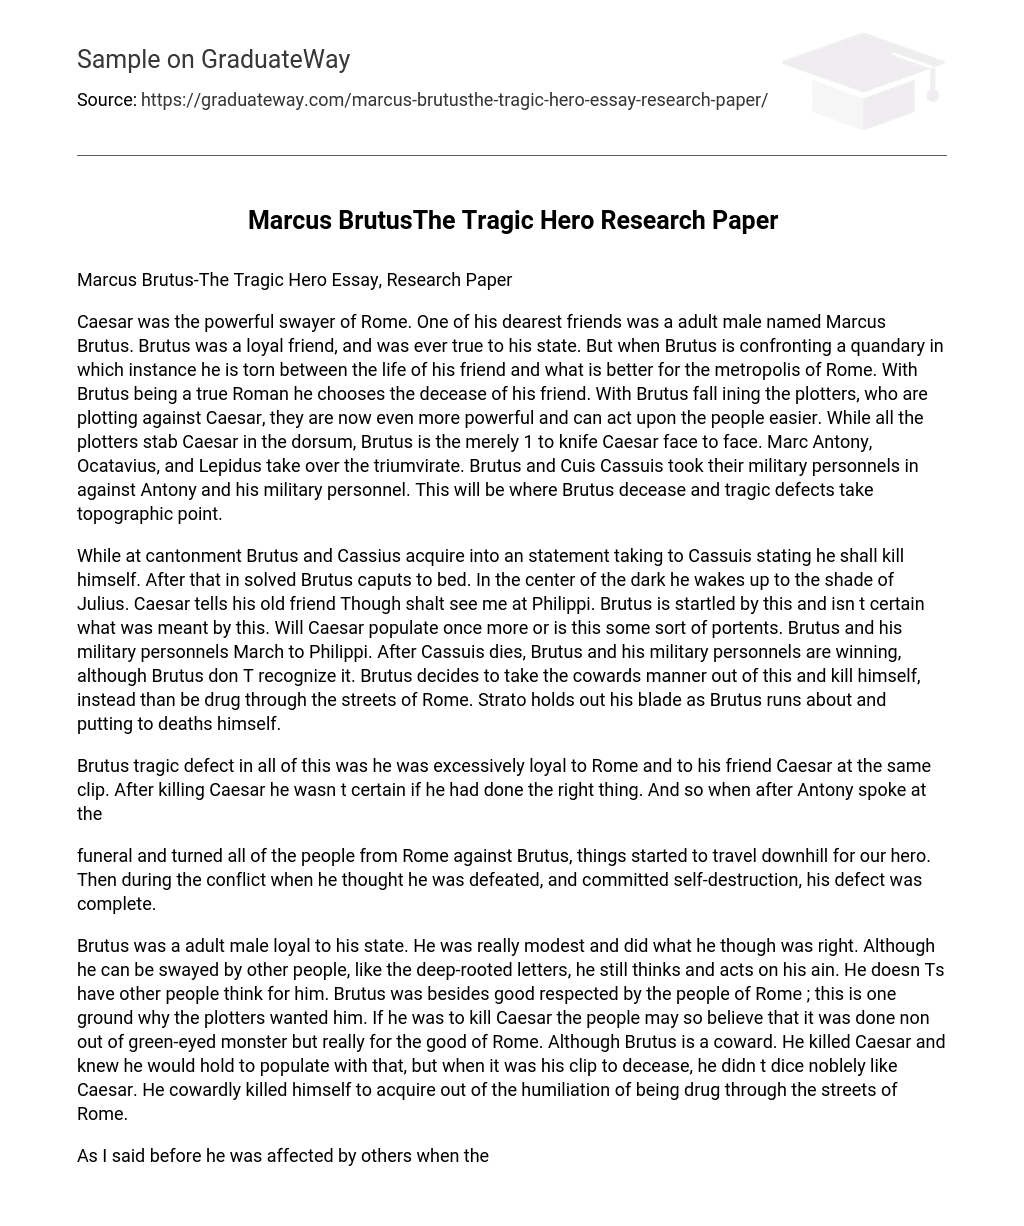 Marcus BrutusThe Tragic Hero Research Paper